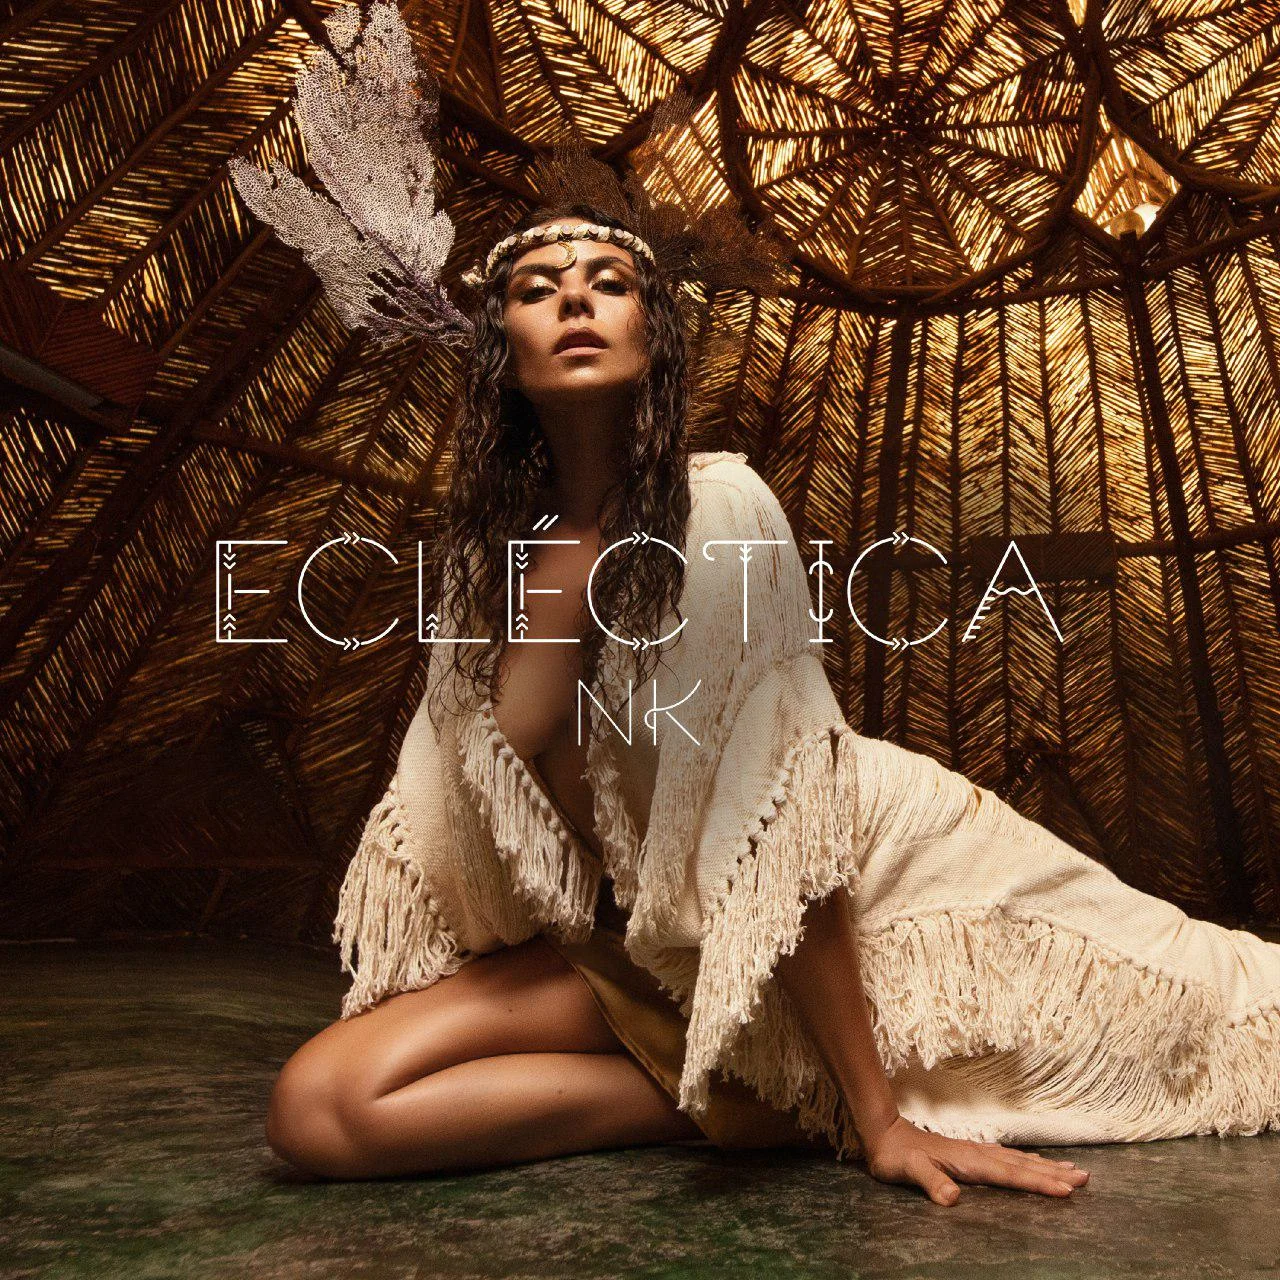 Настя Каменських випустила іспаномовний альбом 'Ecléctica', де просто хіт за хітом - фото 491470